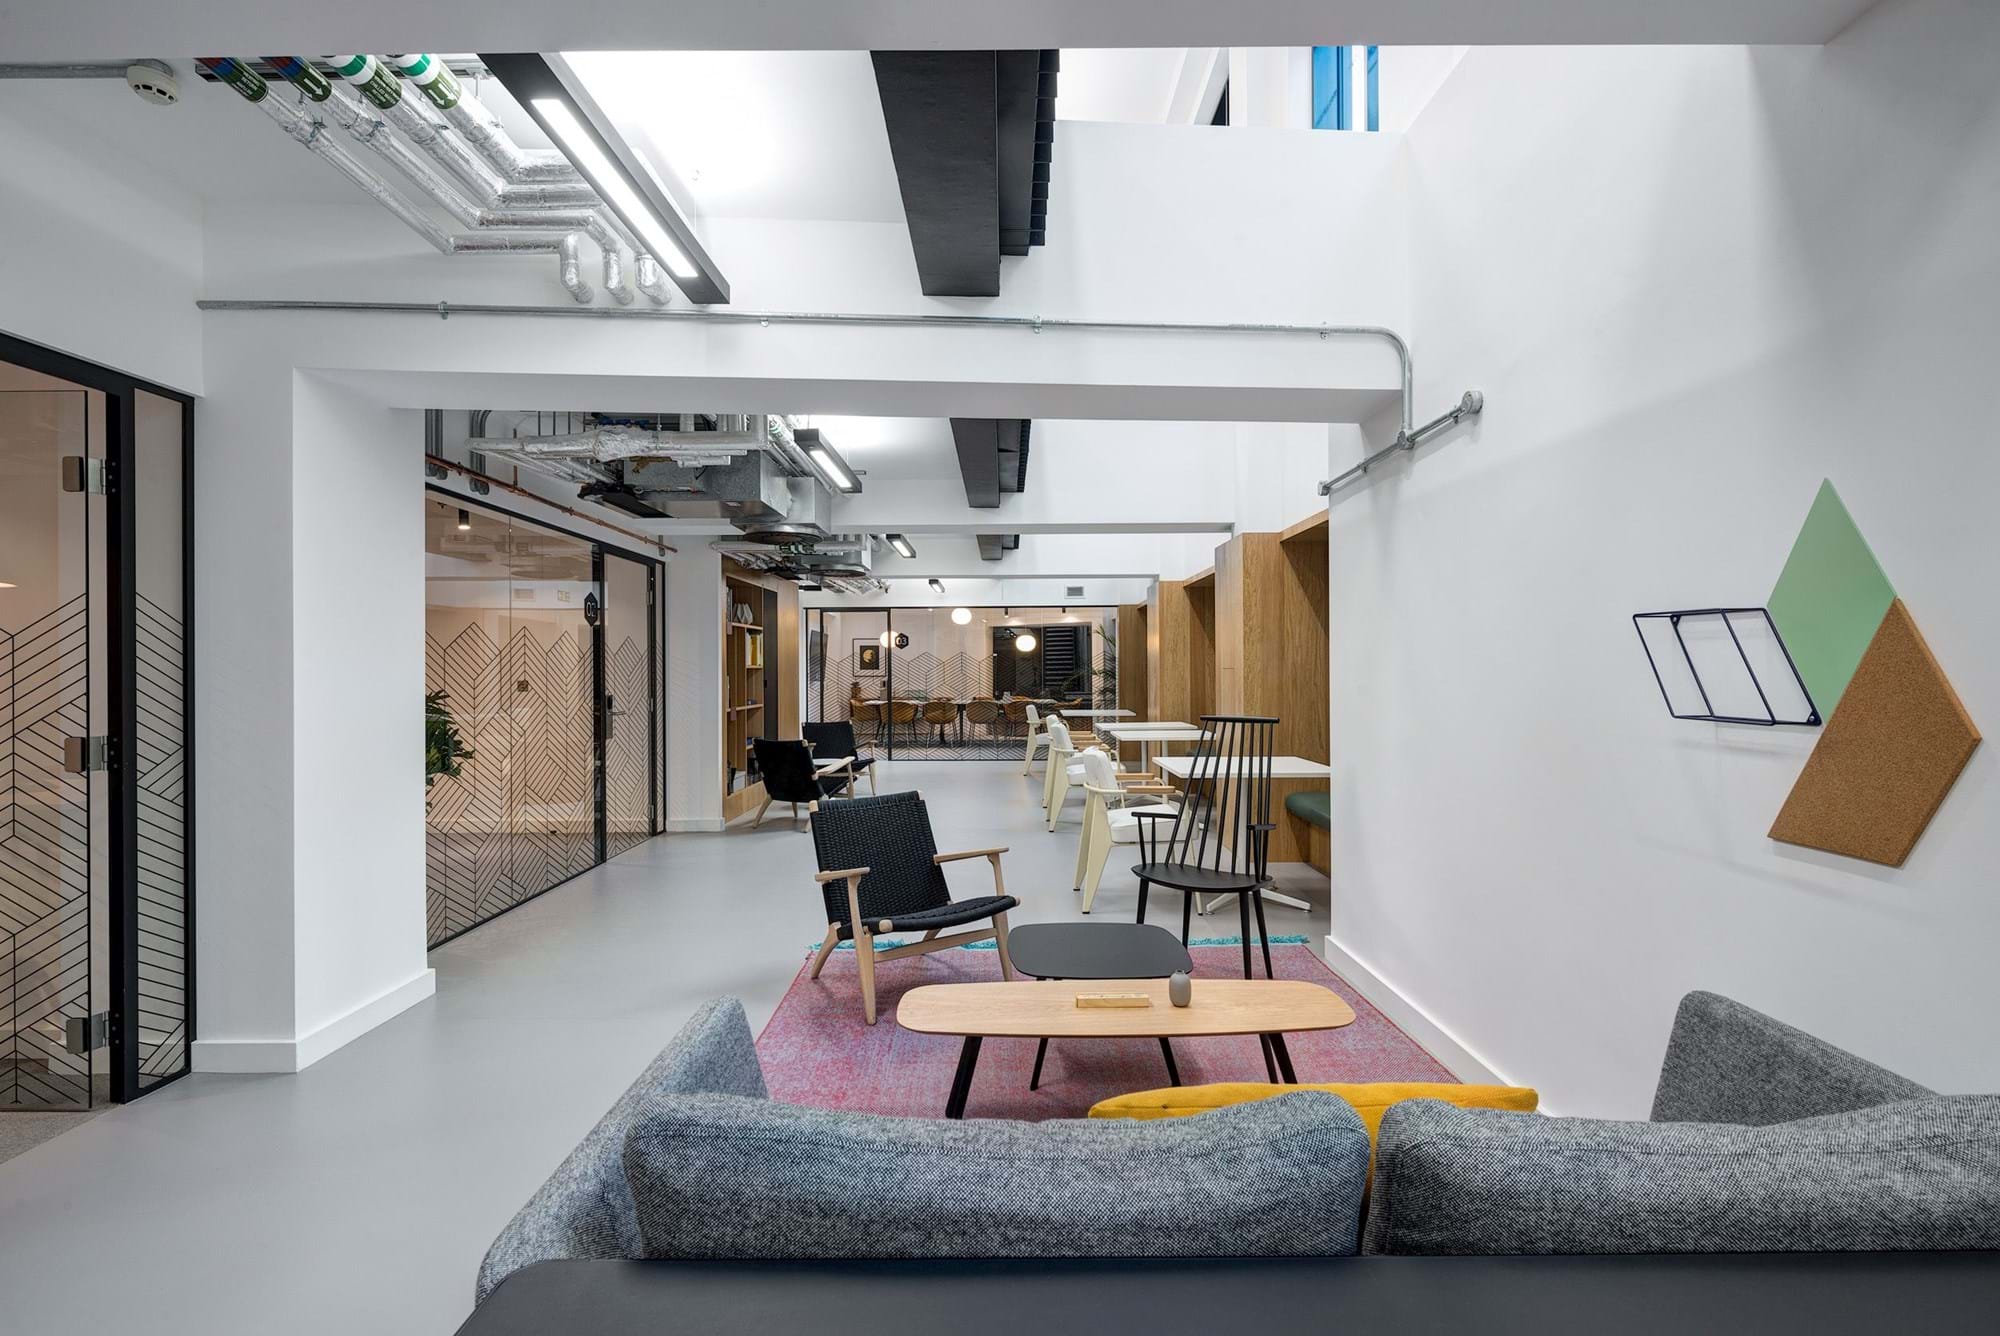 Modus Workspace office design, fit out and refurbishment - Regus spaces Epworth - Spaces Epworth 21 highres sRGB.jpg